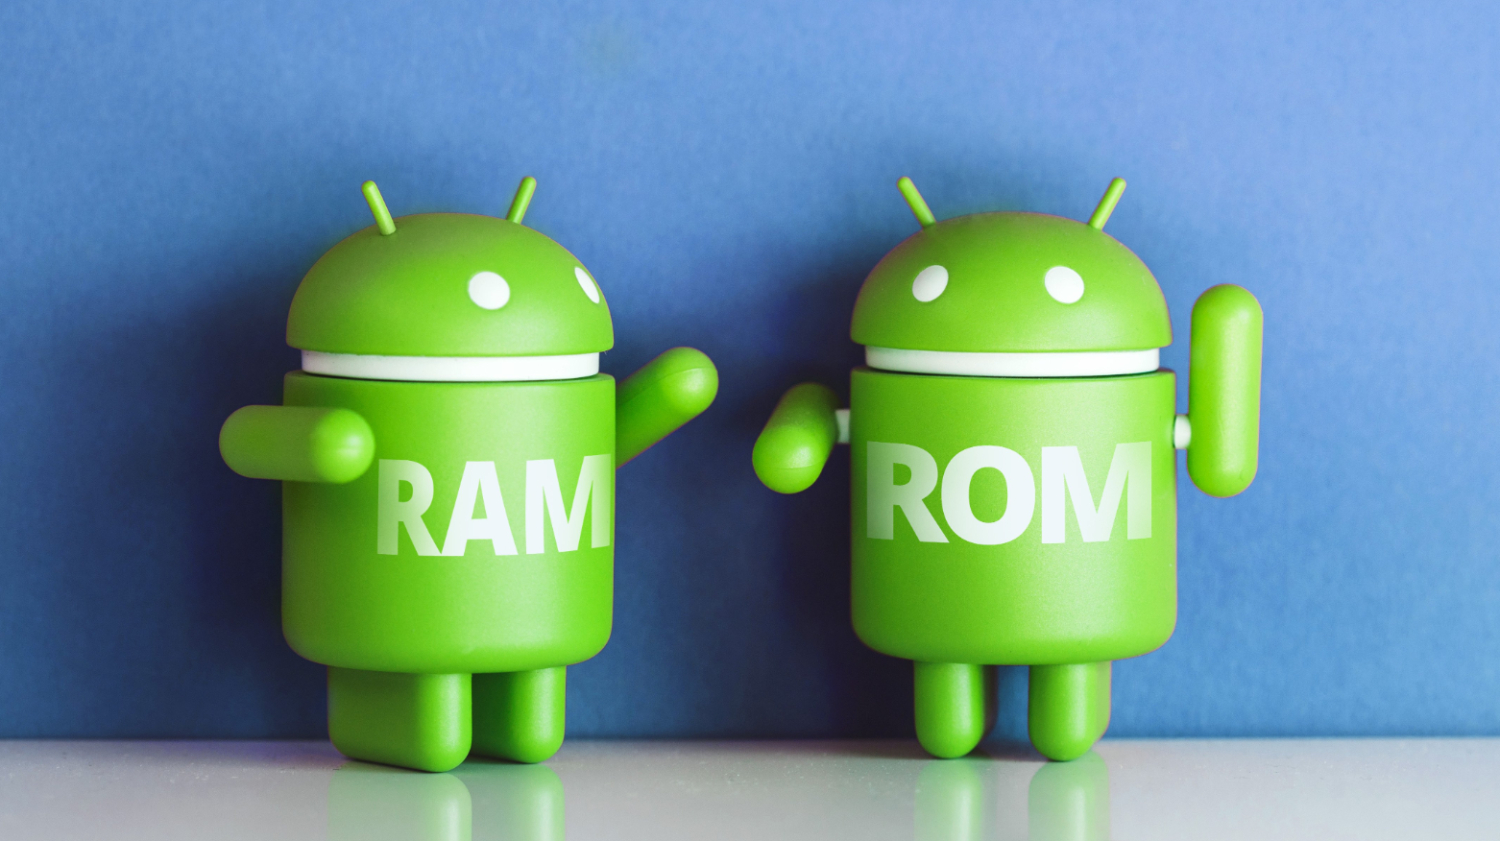 RAM or ROM